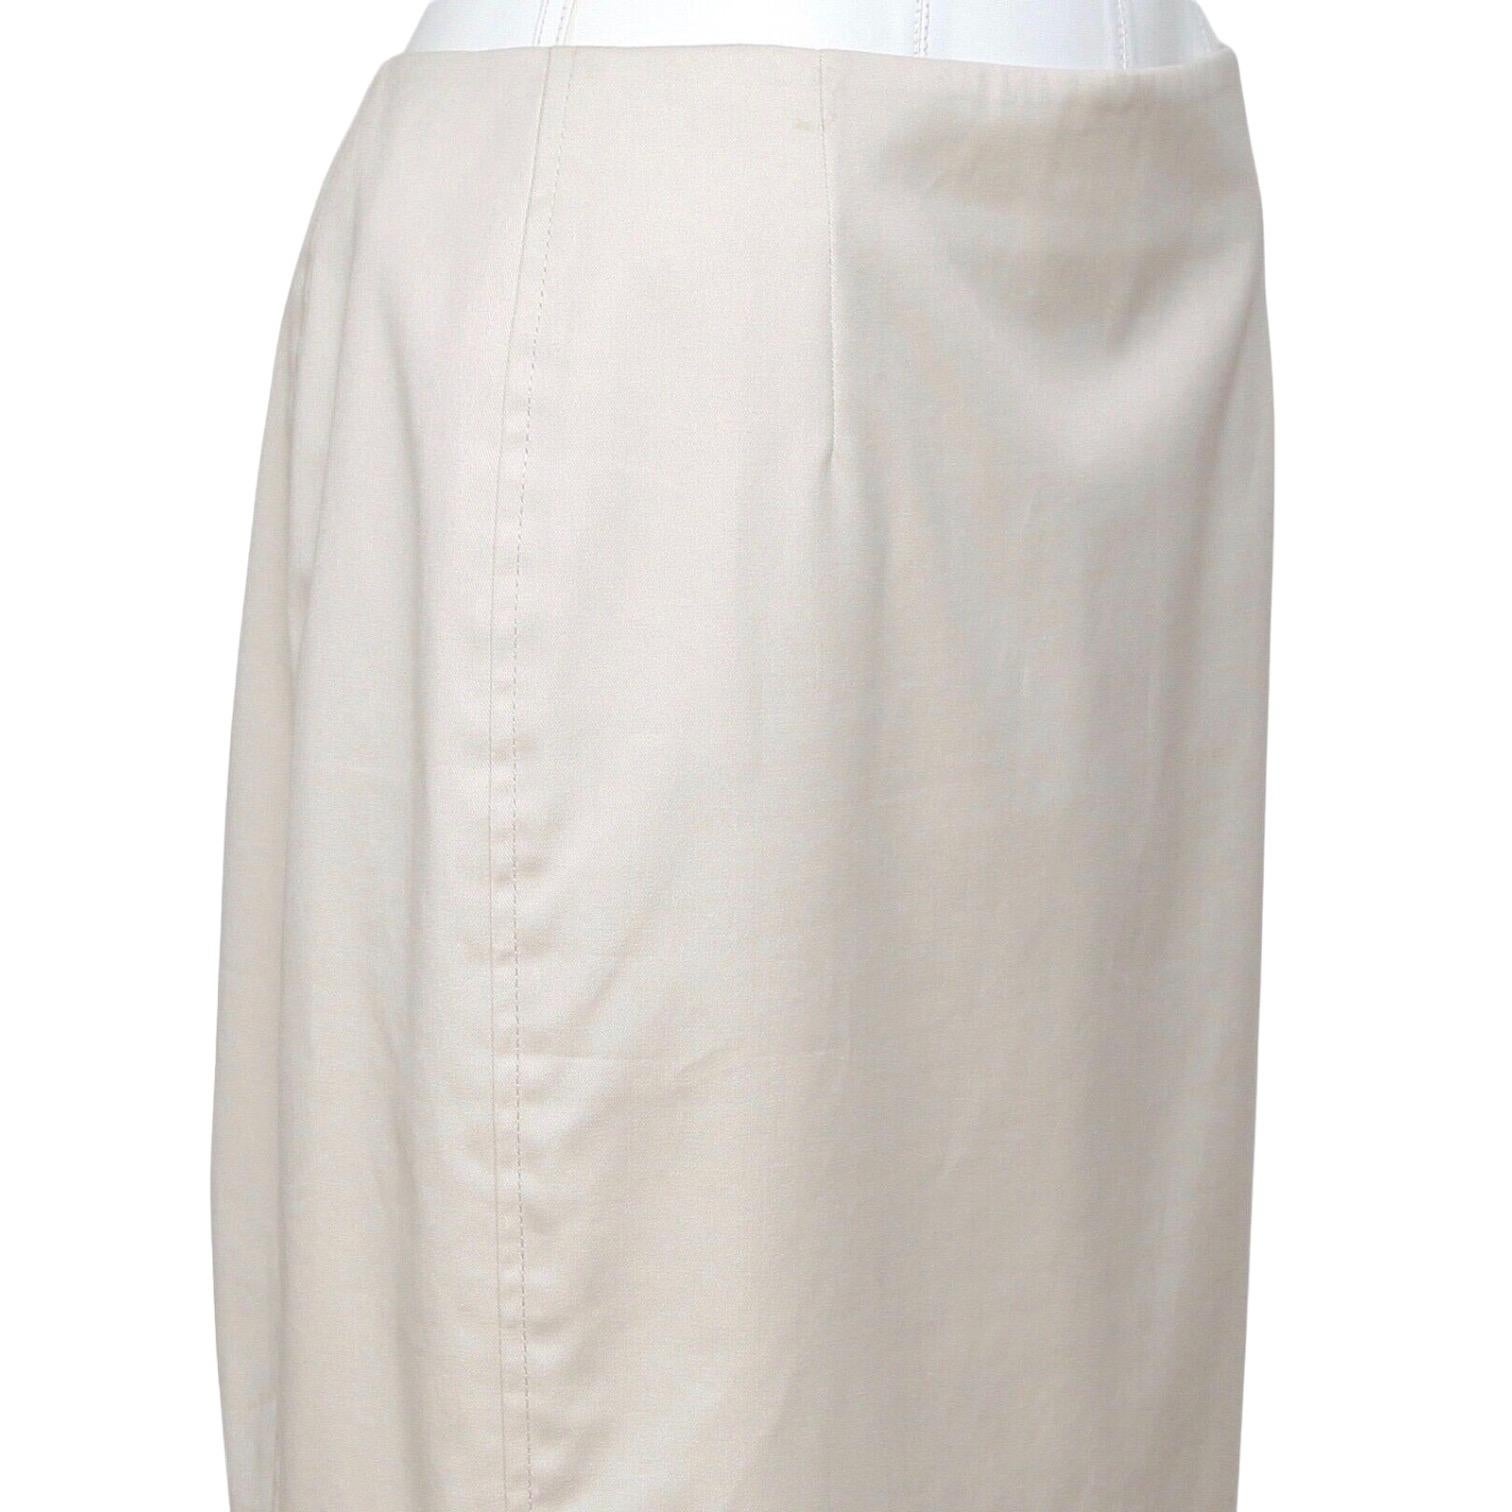 AKRIS PUNTO Beige Skirt Dress Straight Cotton Clothing US 8 FR 40 For Sale 1